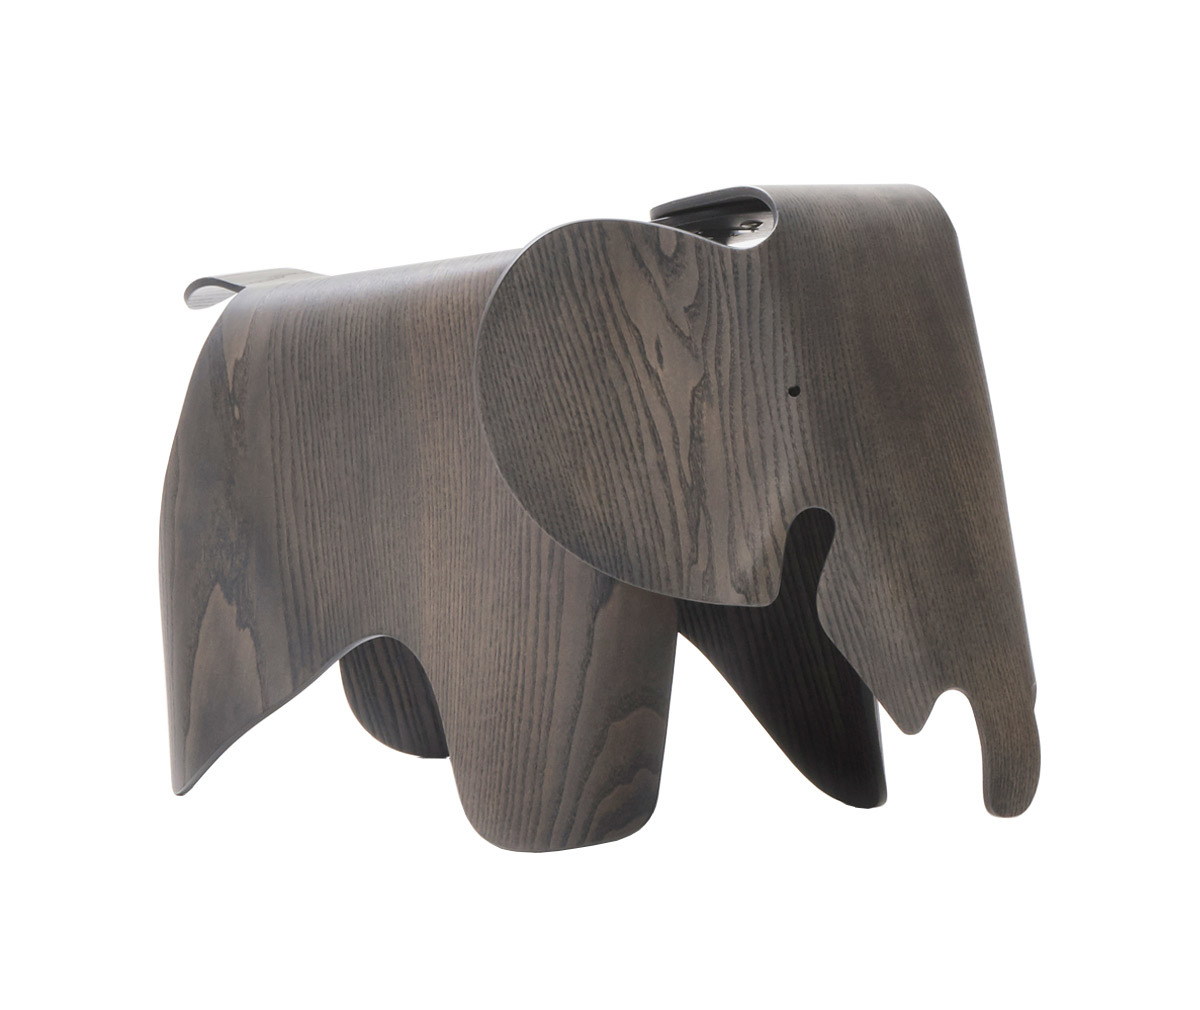 Vitra Eames Elephant Stool Grey Ash, Limited Edition